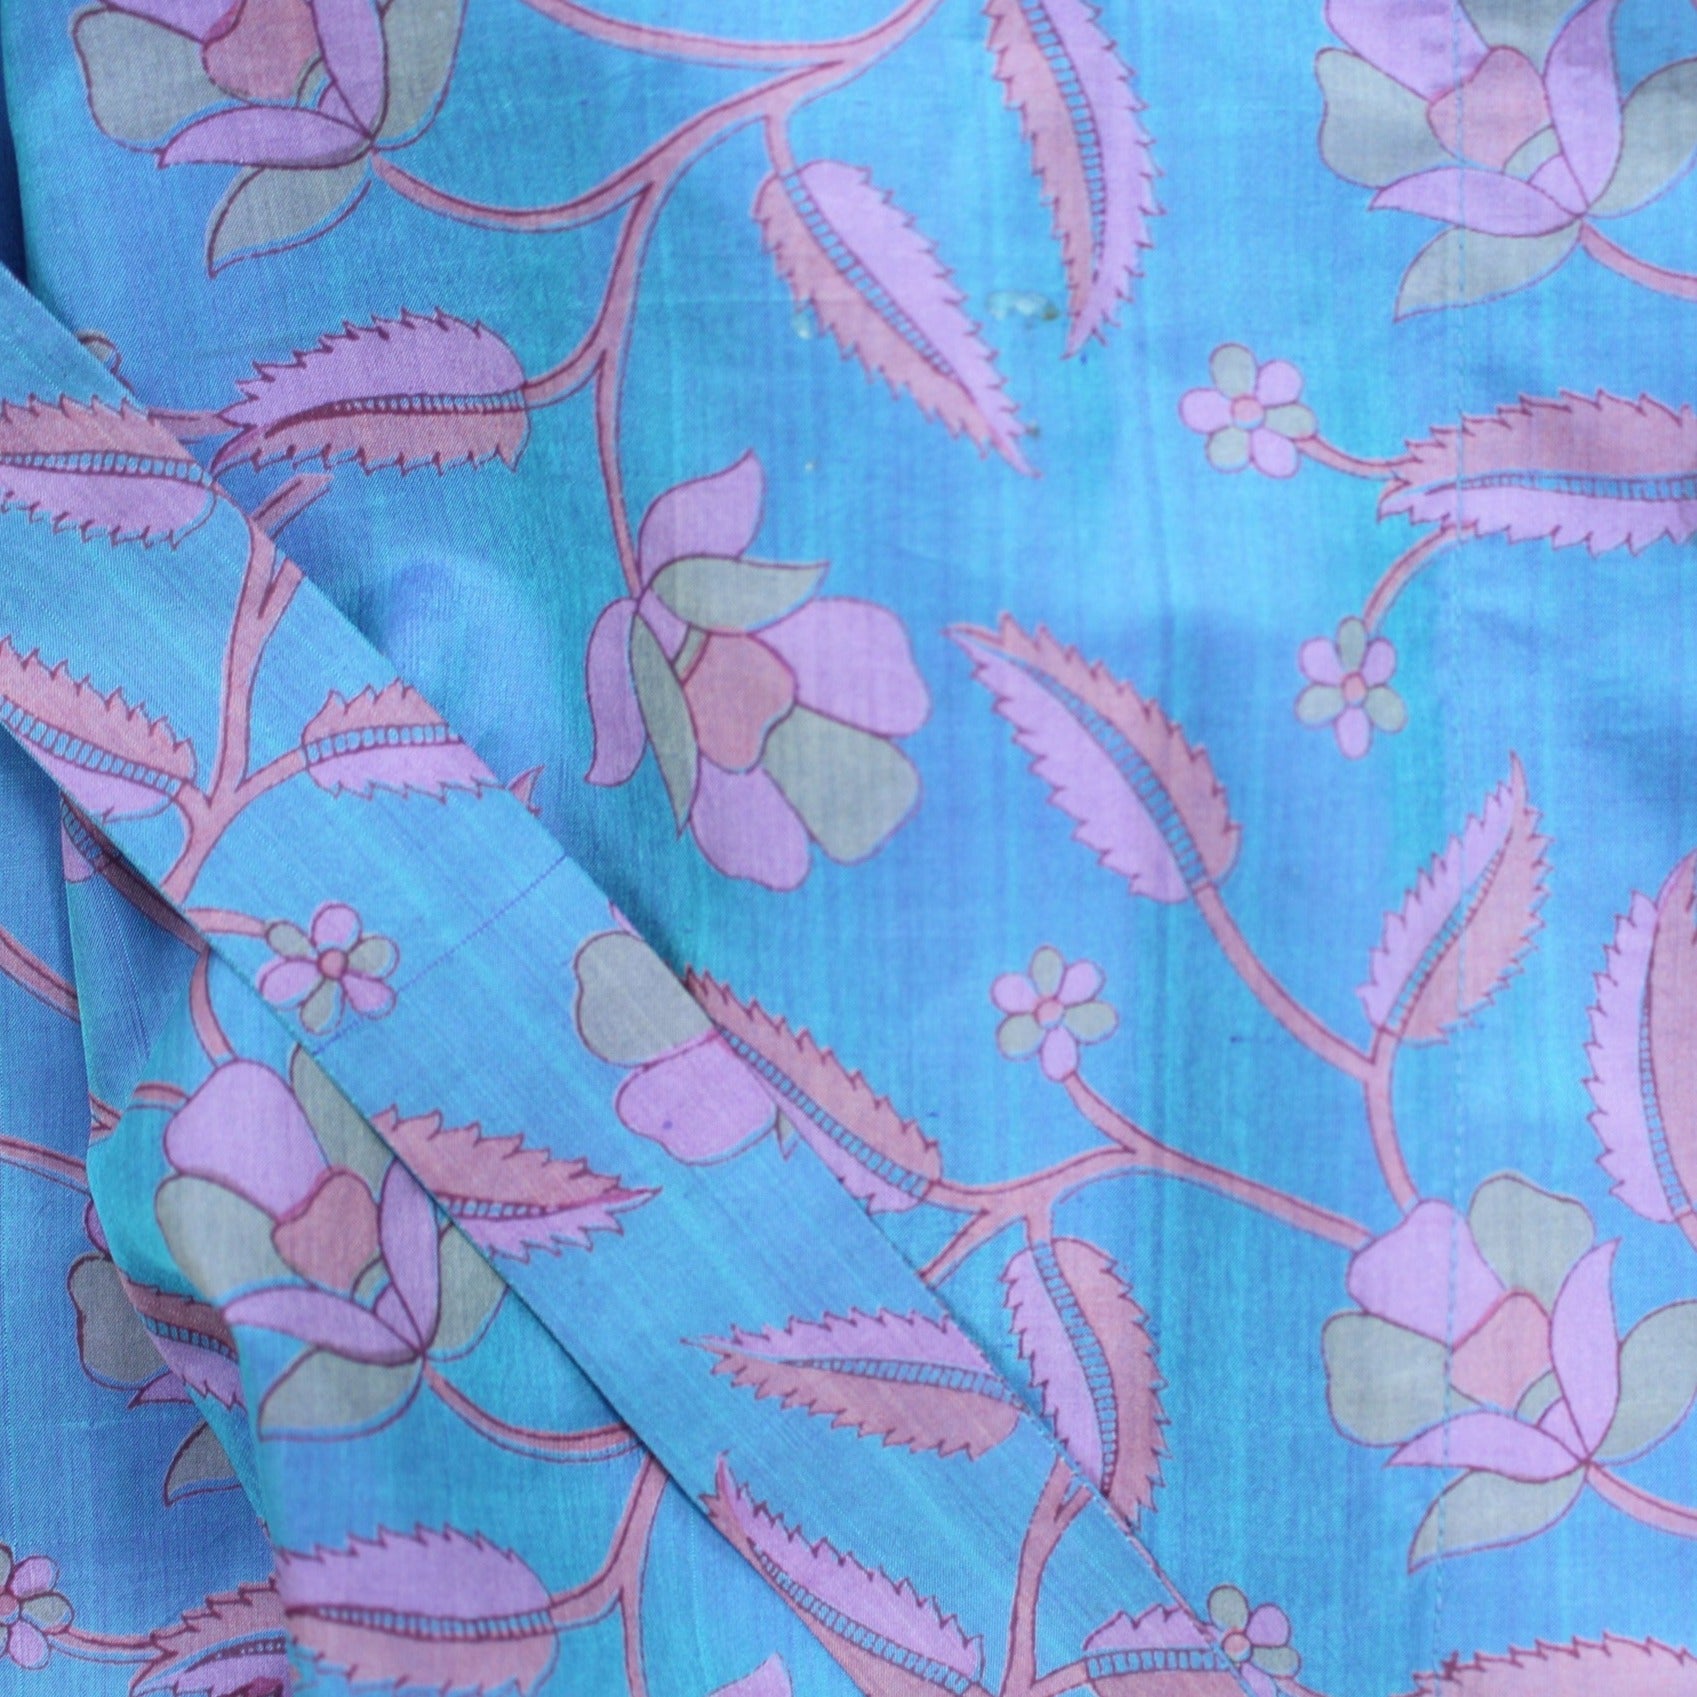 Neem - Vintage Silk Sari Indigo Blue Floral Print Kimono Style Wrap Dress close up